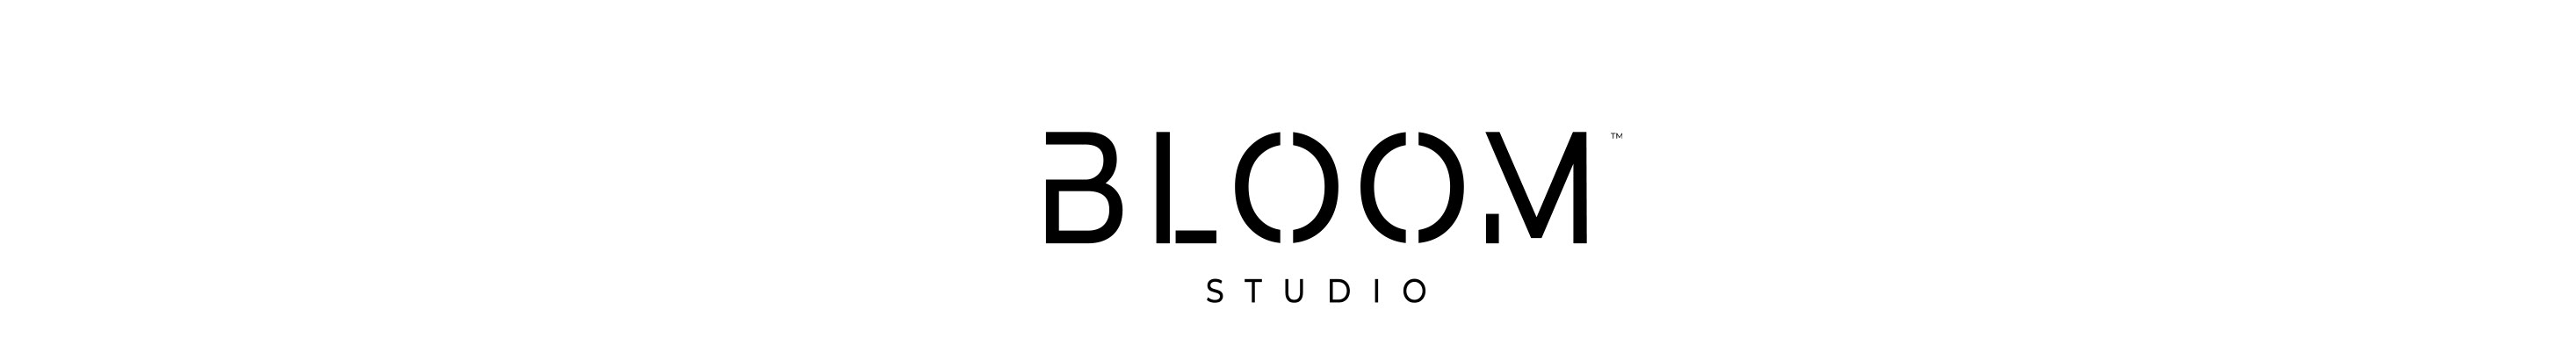 Bloom Studio's profile banner